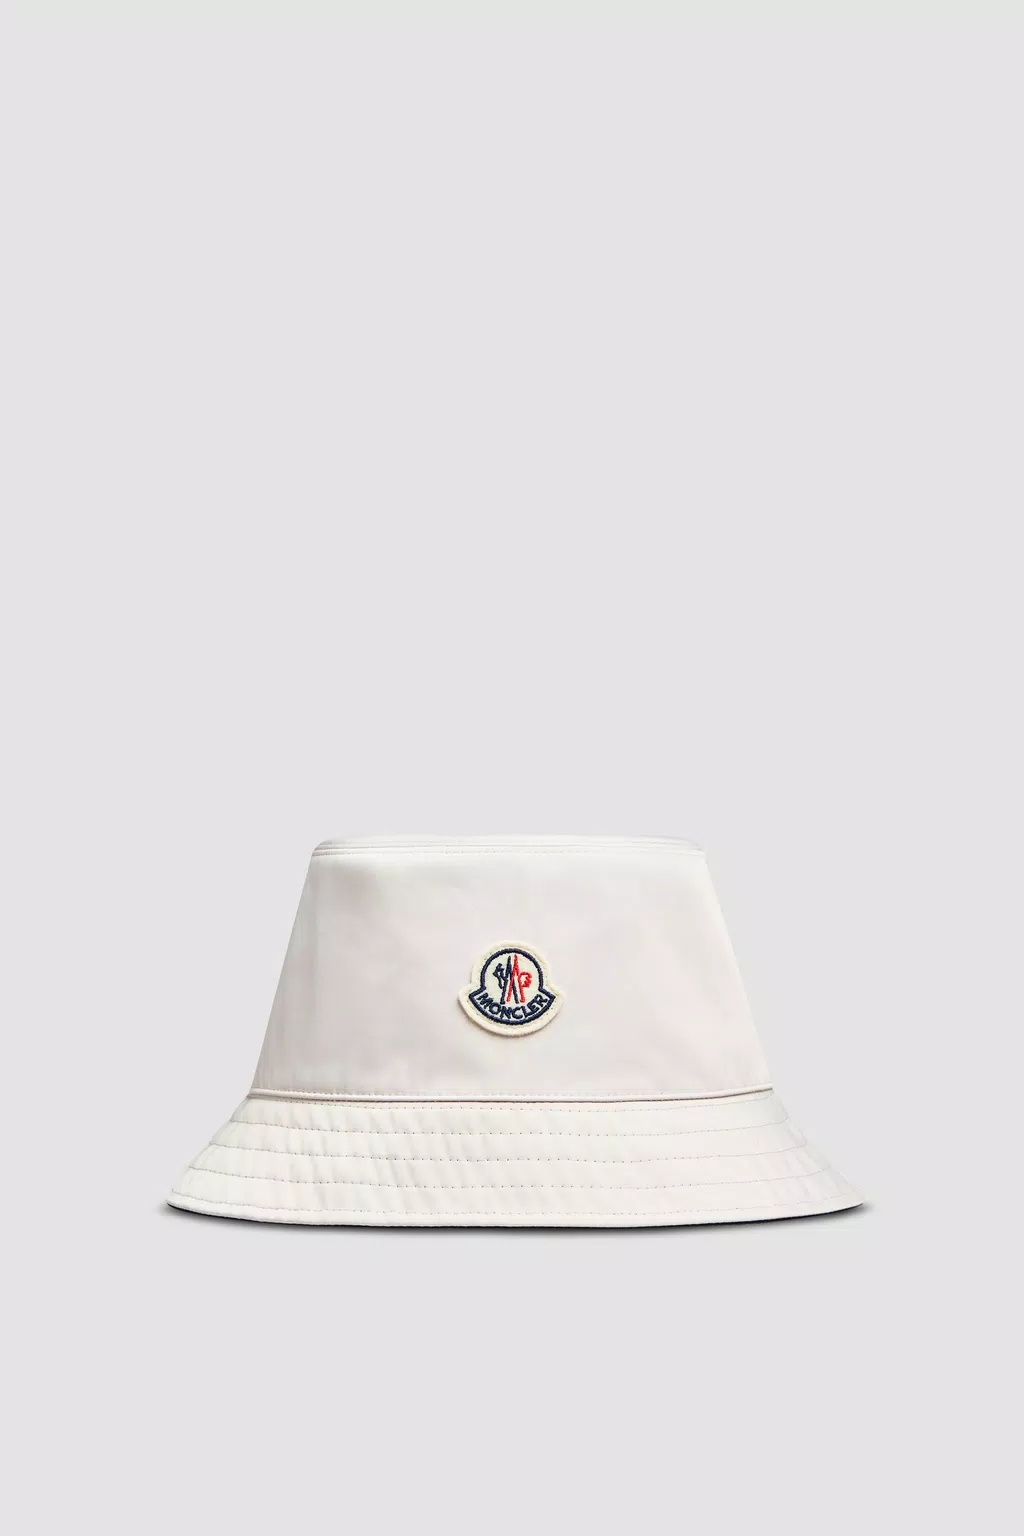 Bucket Hats, Beanies, Caps & Visors for Women